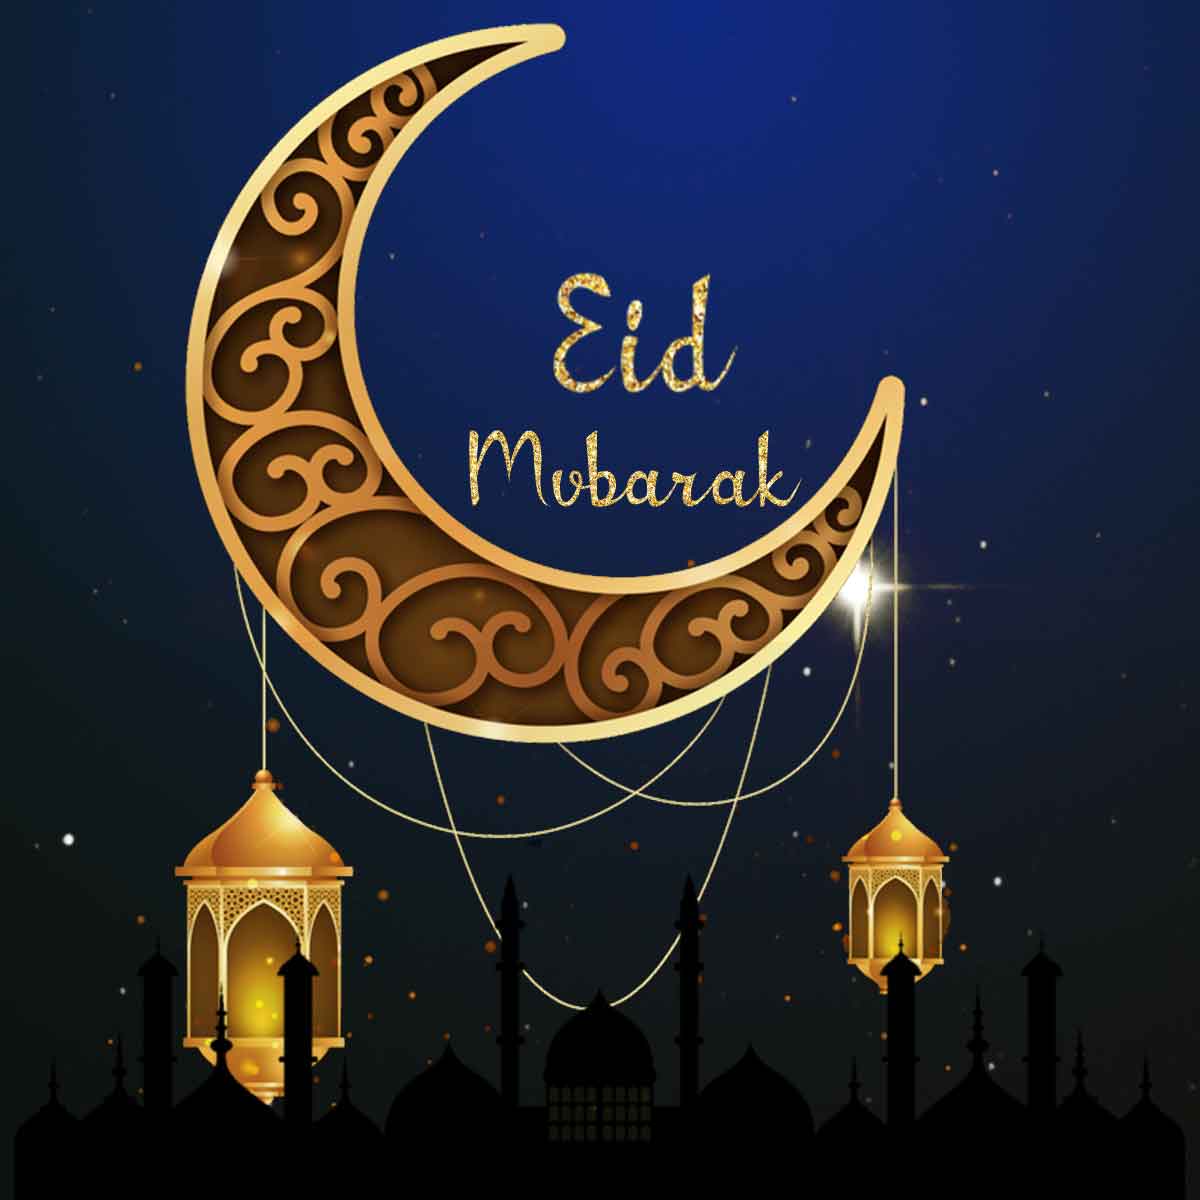 Top 999+ eid mubarak images free download – Amazing Collection eid mubarak images free download Full 4K